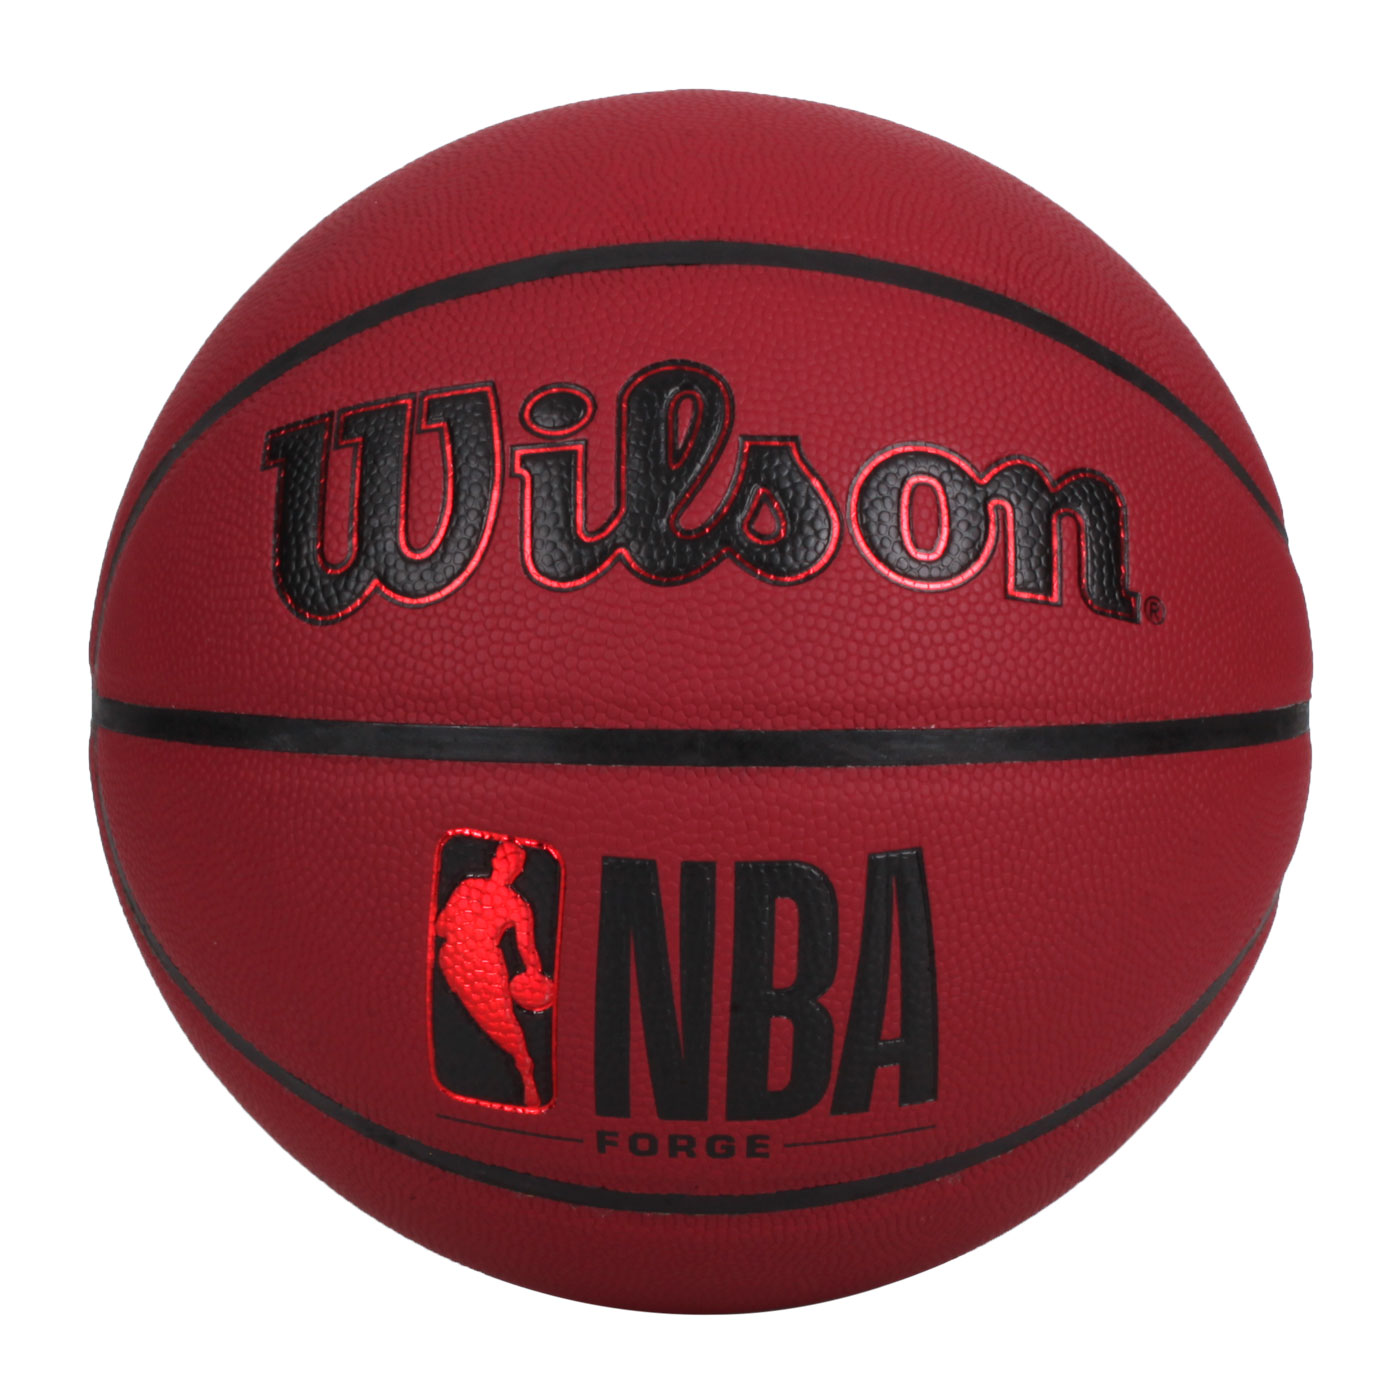 WILSON NBA FORGE系列 合成皮籃球#7 WTB8201XB07